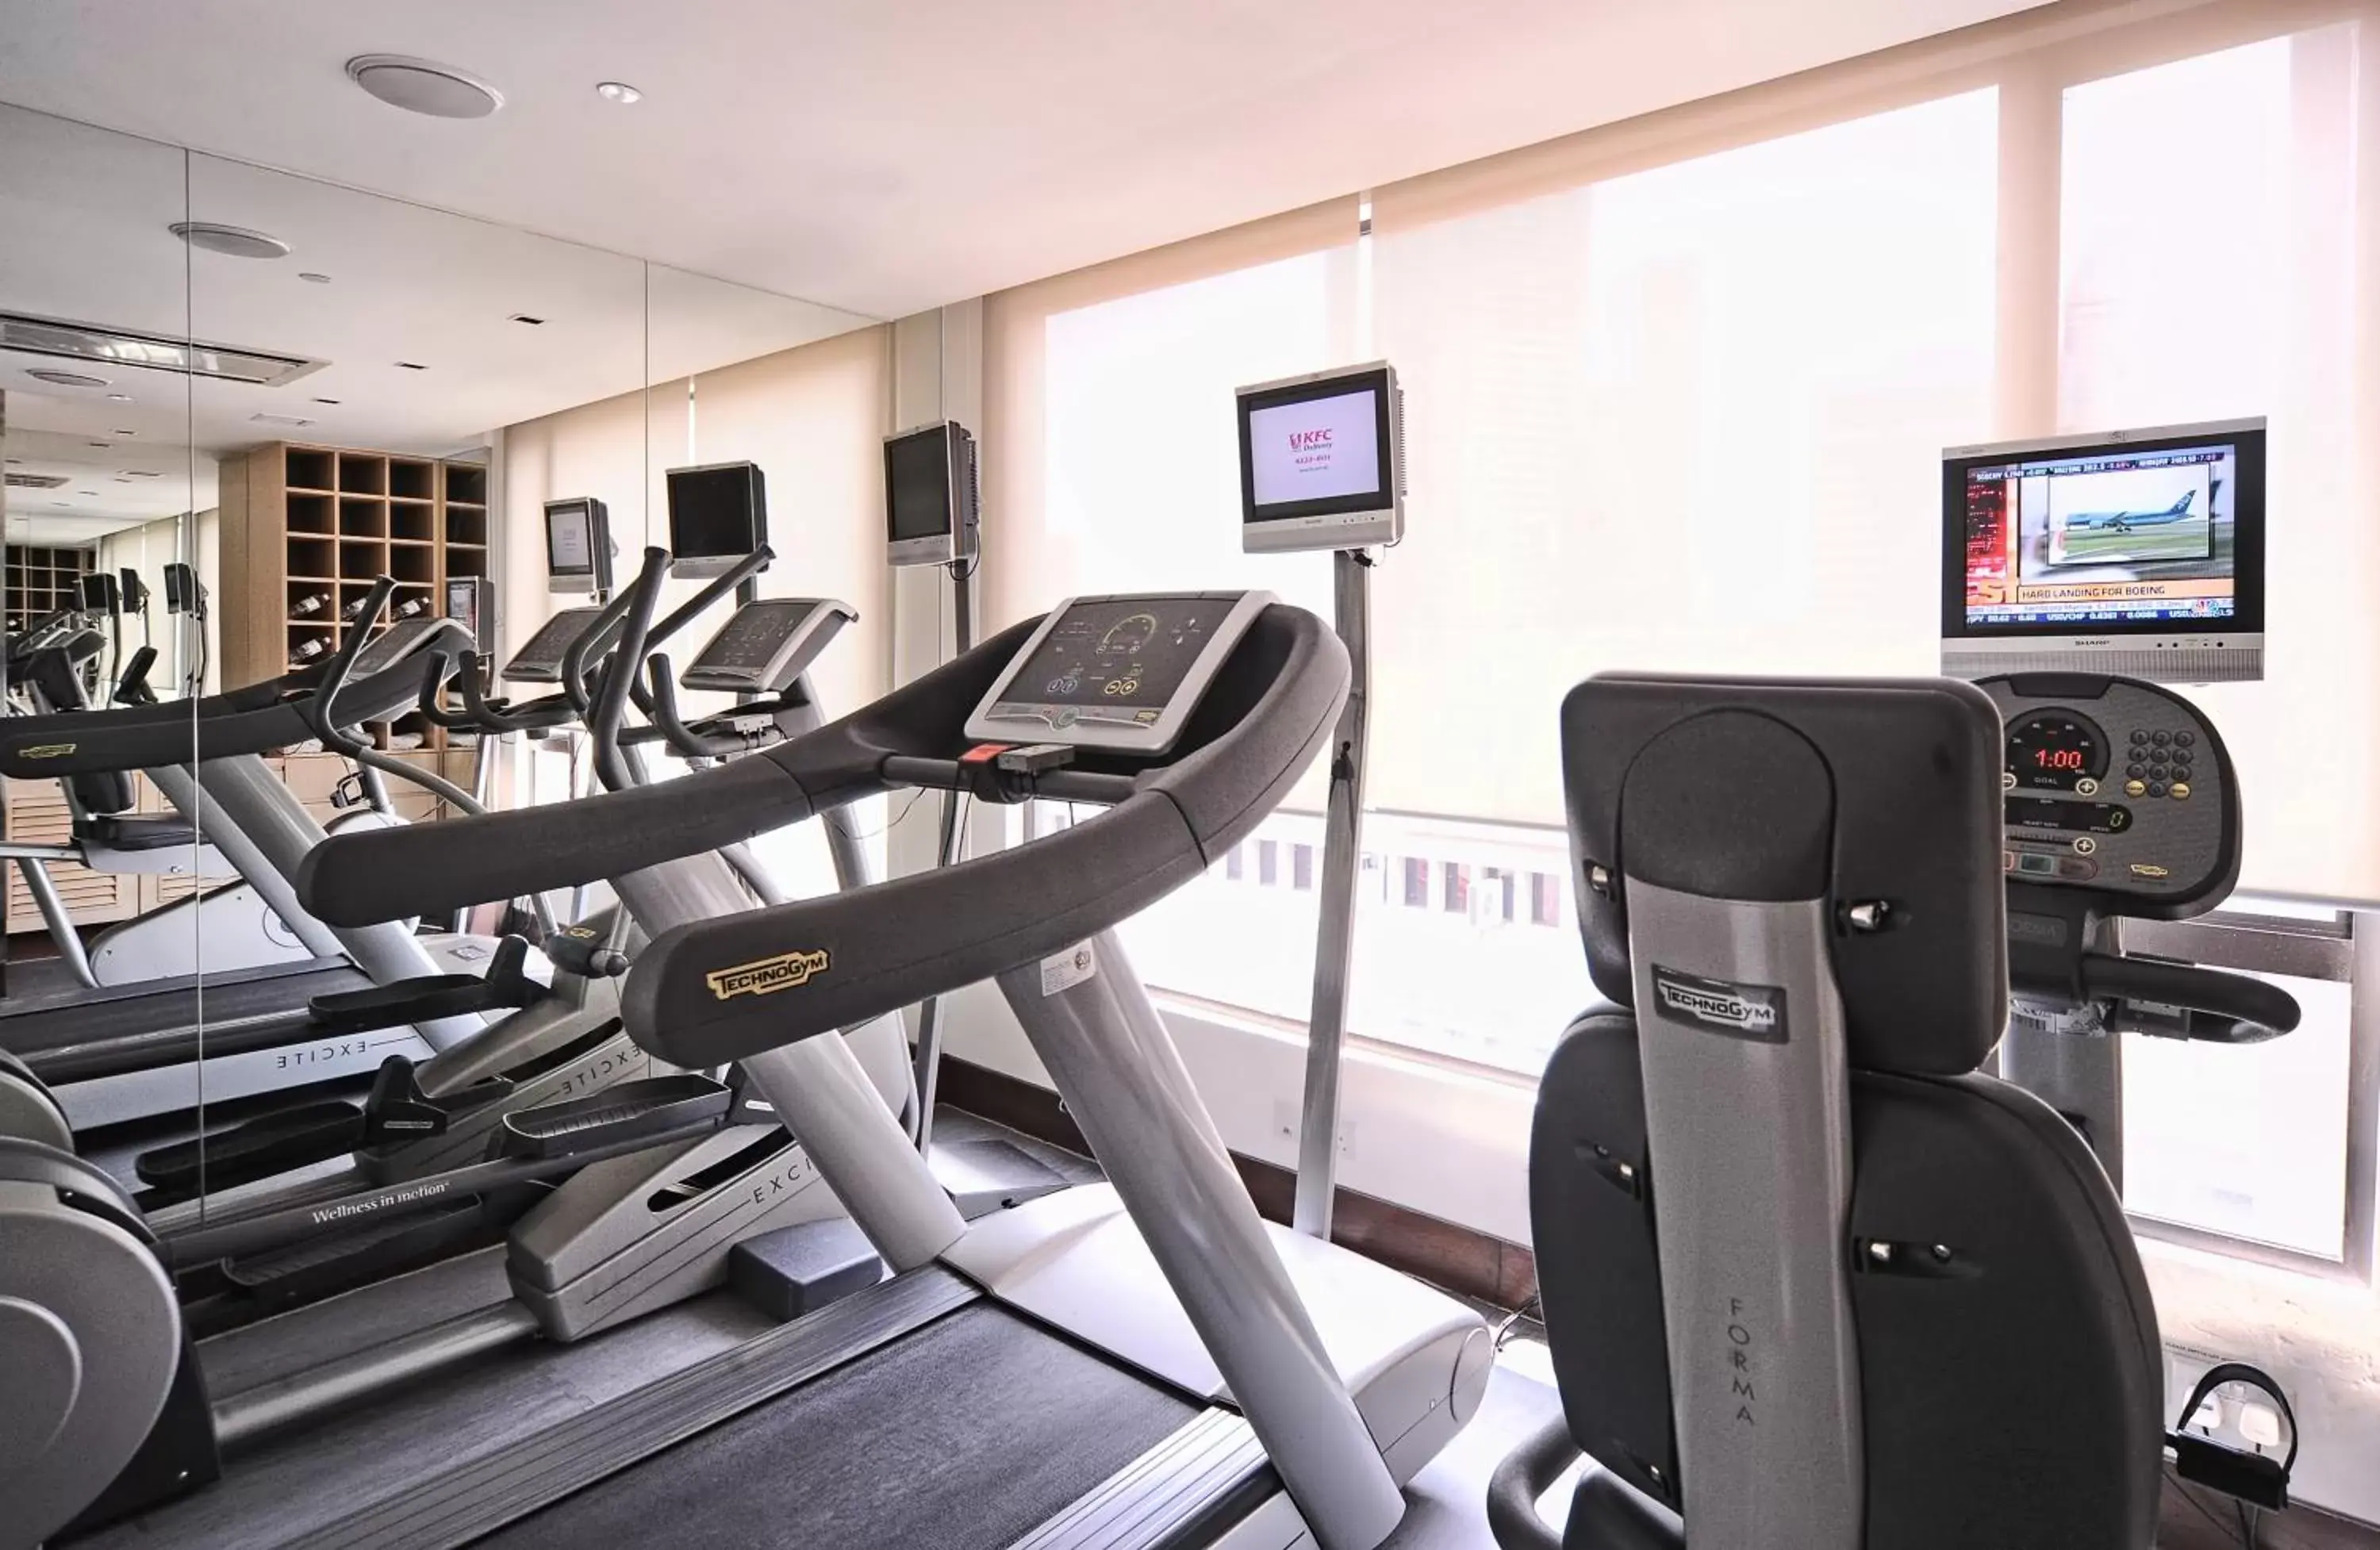 Fitness centre/facilities, Fitness Center/Facilities in Naumi Hotel